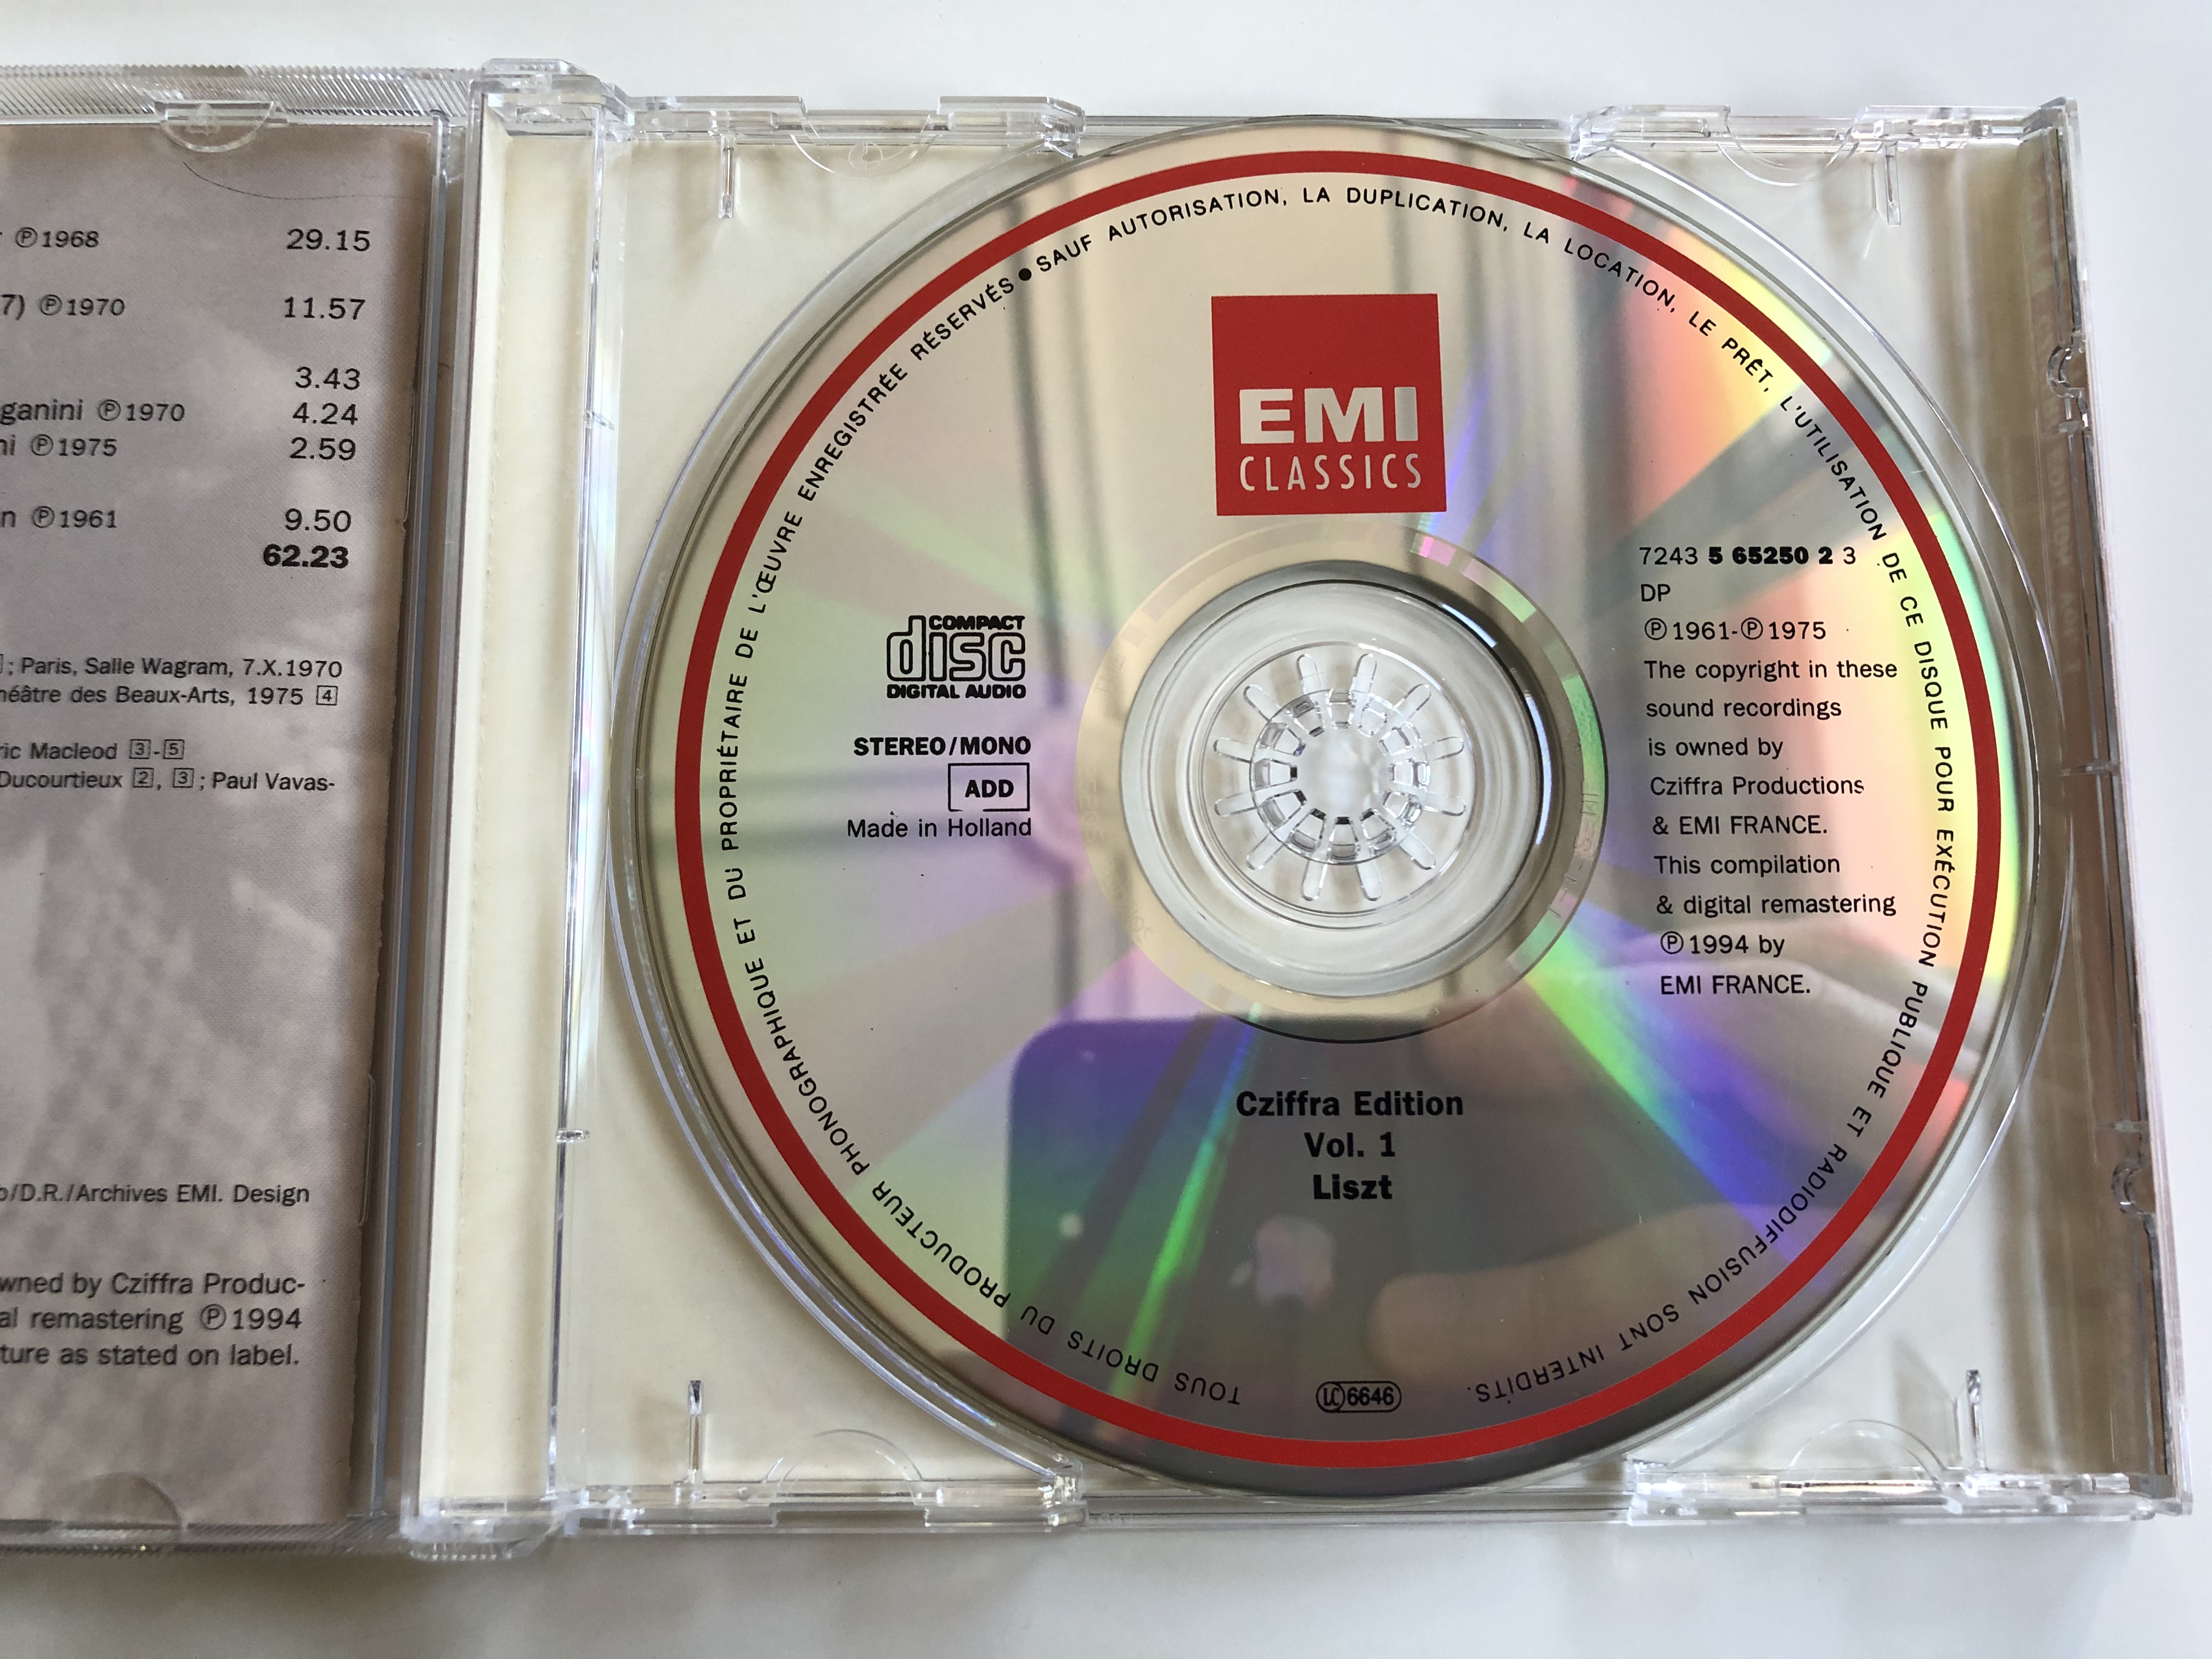 cziffra-edition-1-liszt-emi-classics-audio-cd-1994-stereo-mono-cdm-5652502-6-.jpg